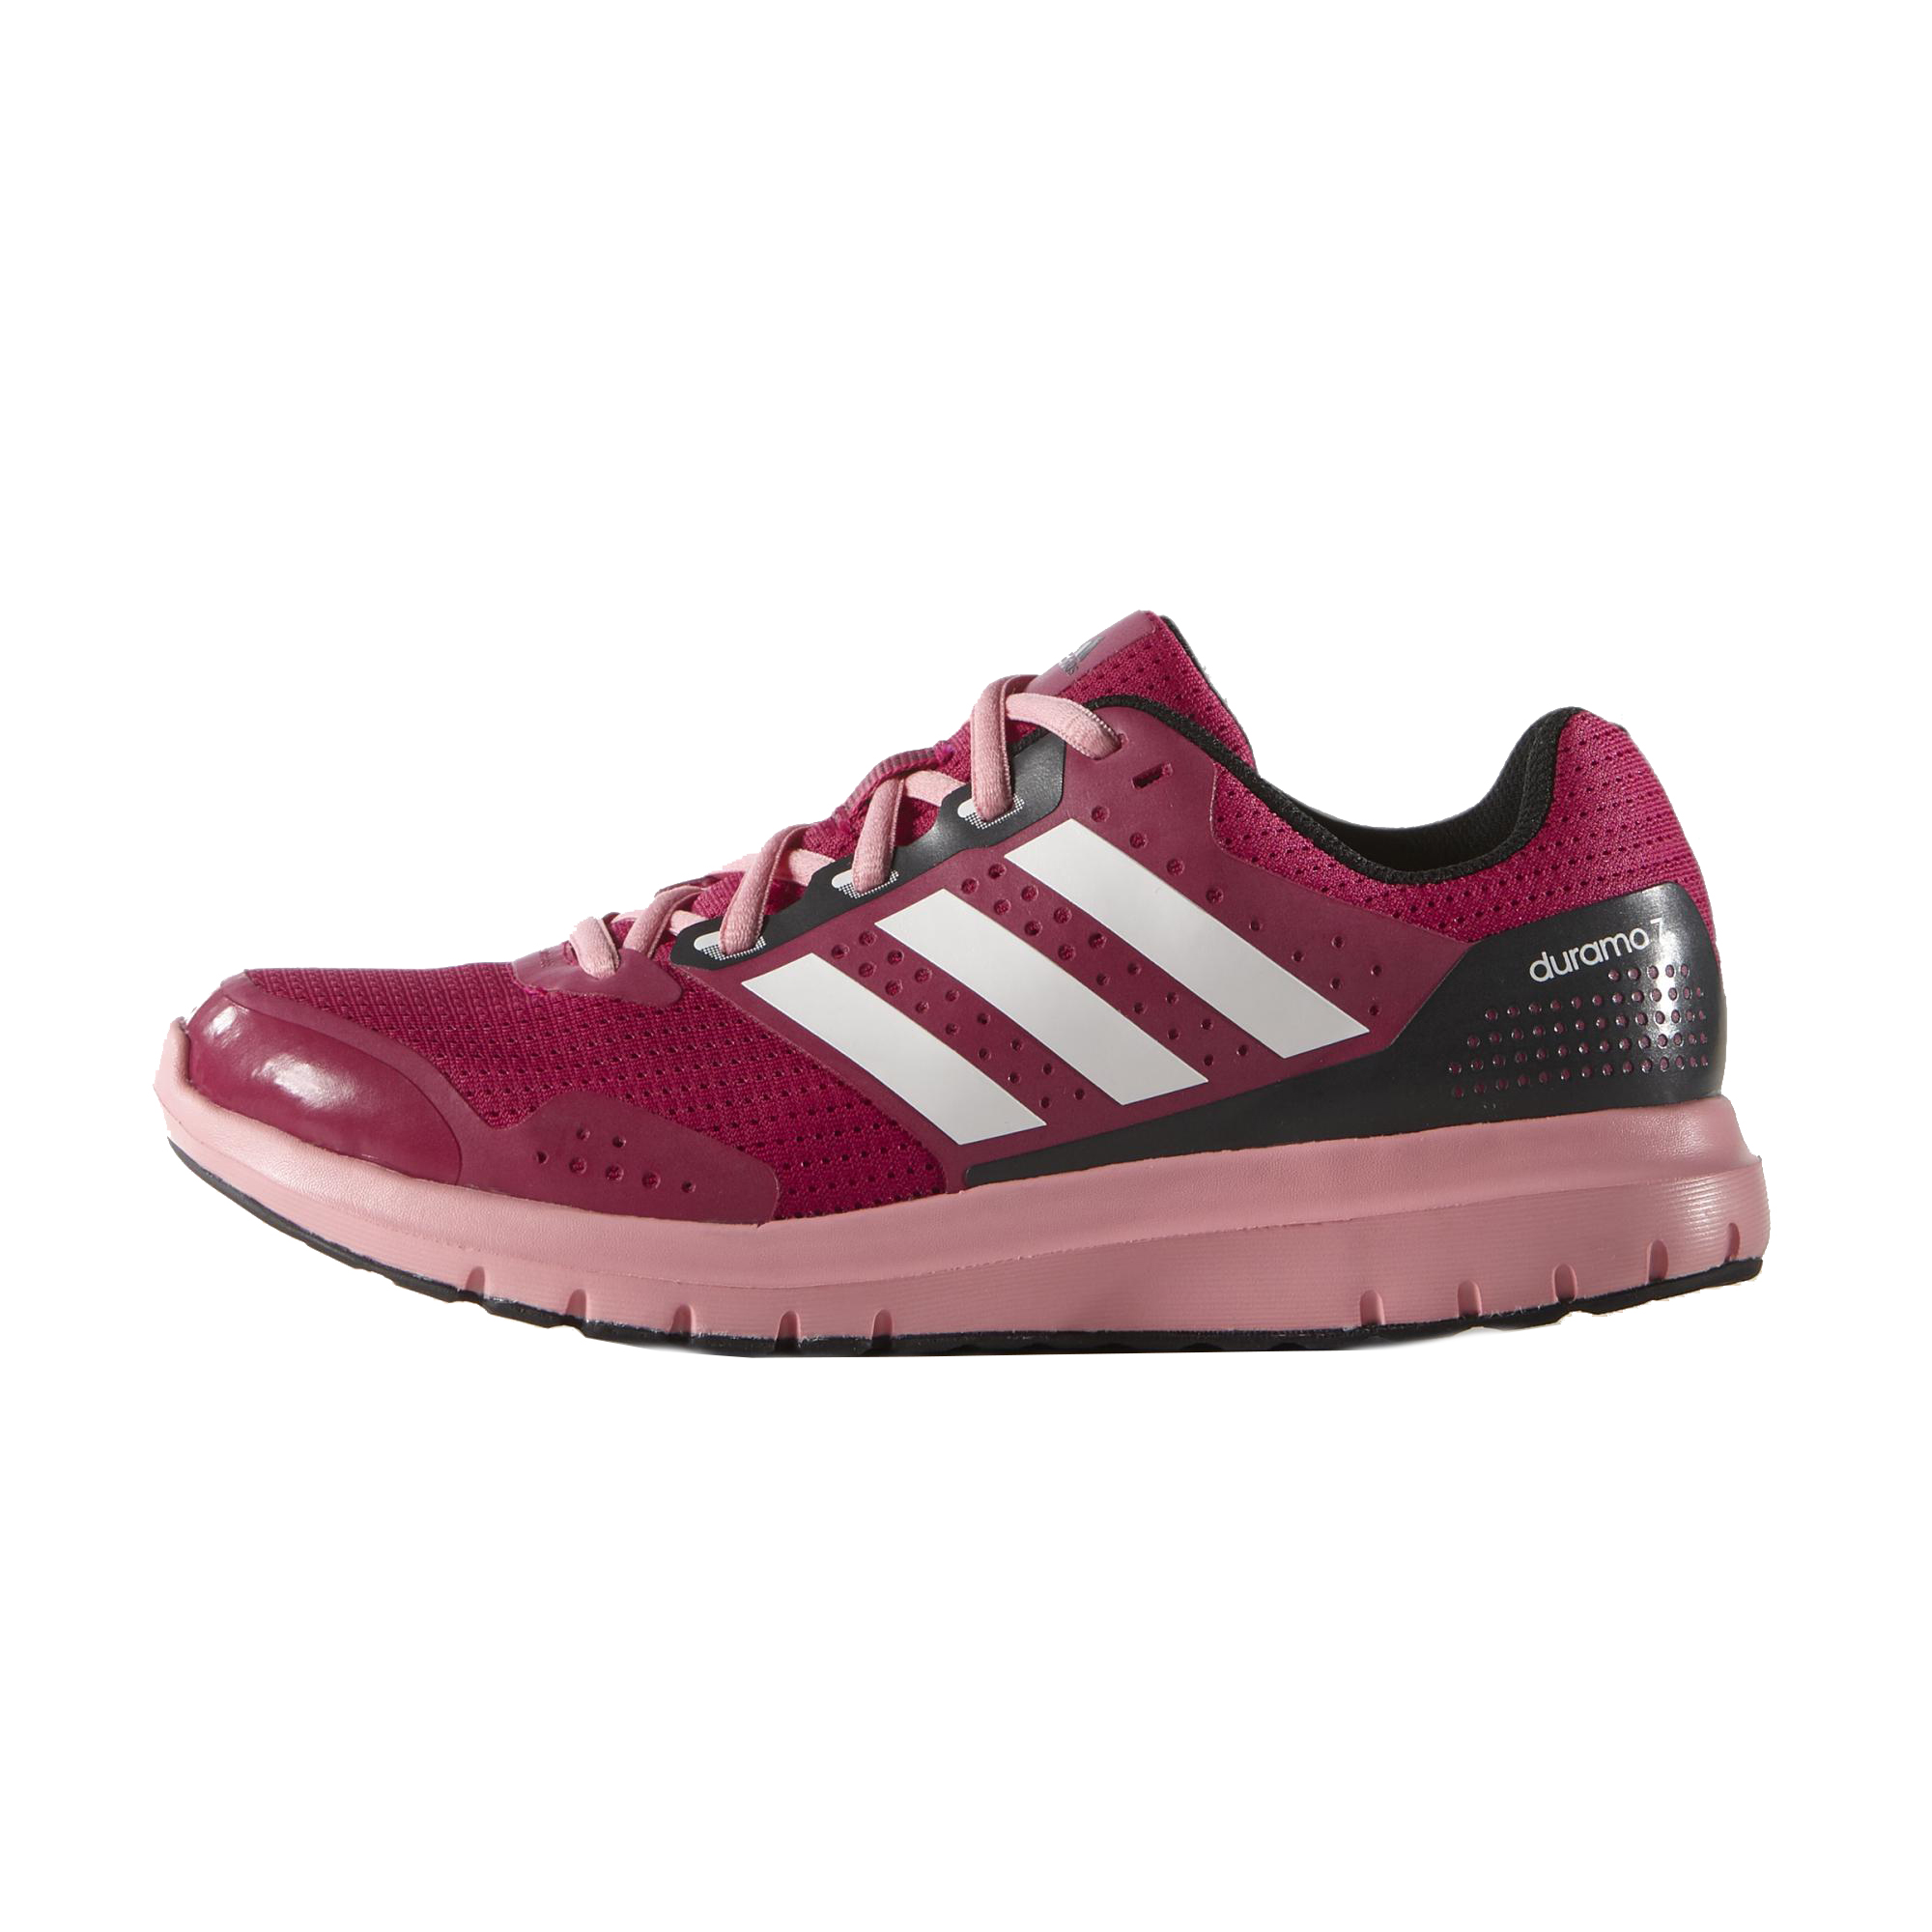 Adidas Duramo 7 W (rosa/blanco/negro) - manelsanchez.com